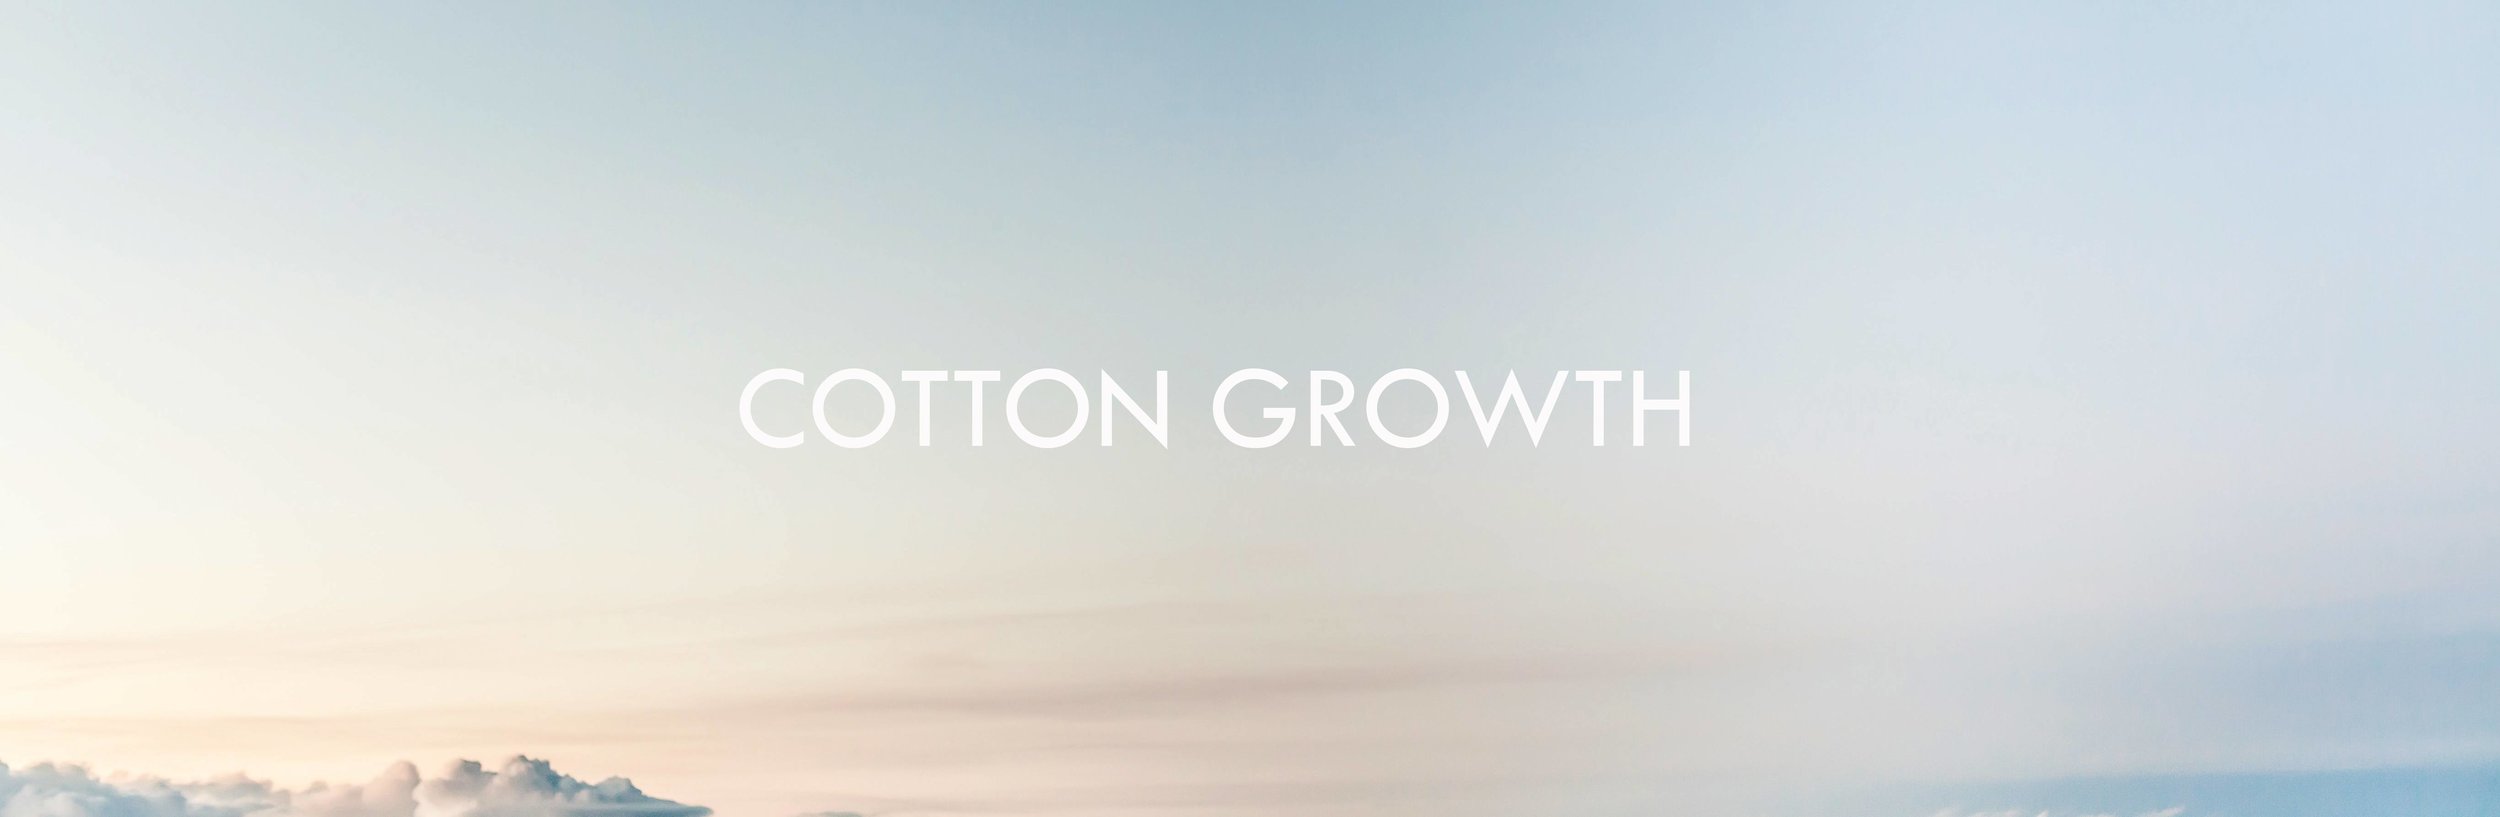 cotton_growth_final.jpg